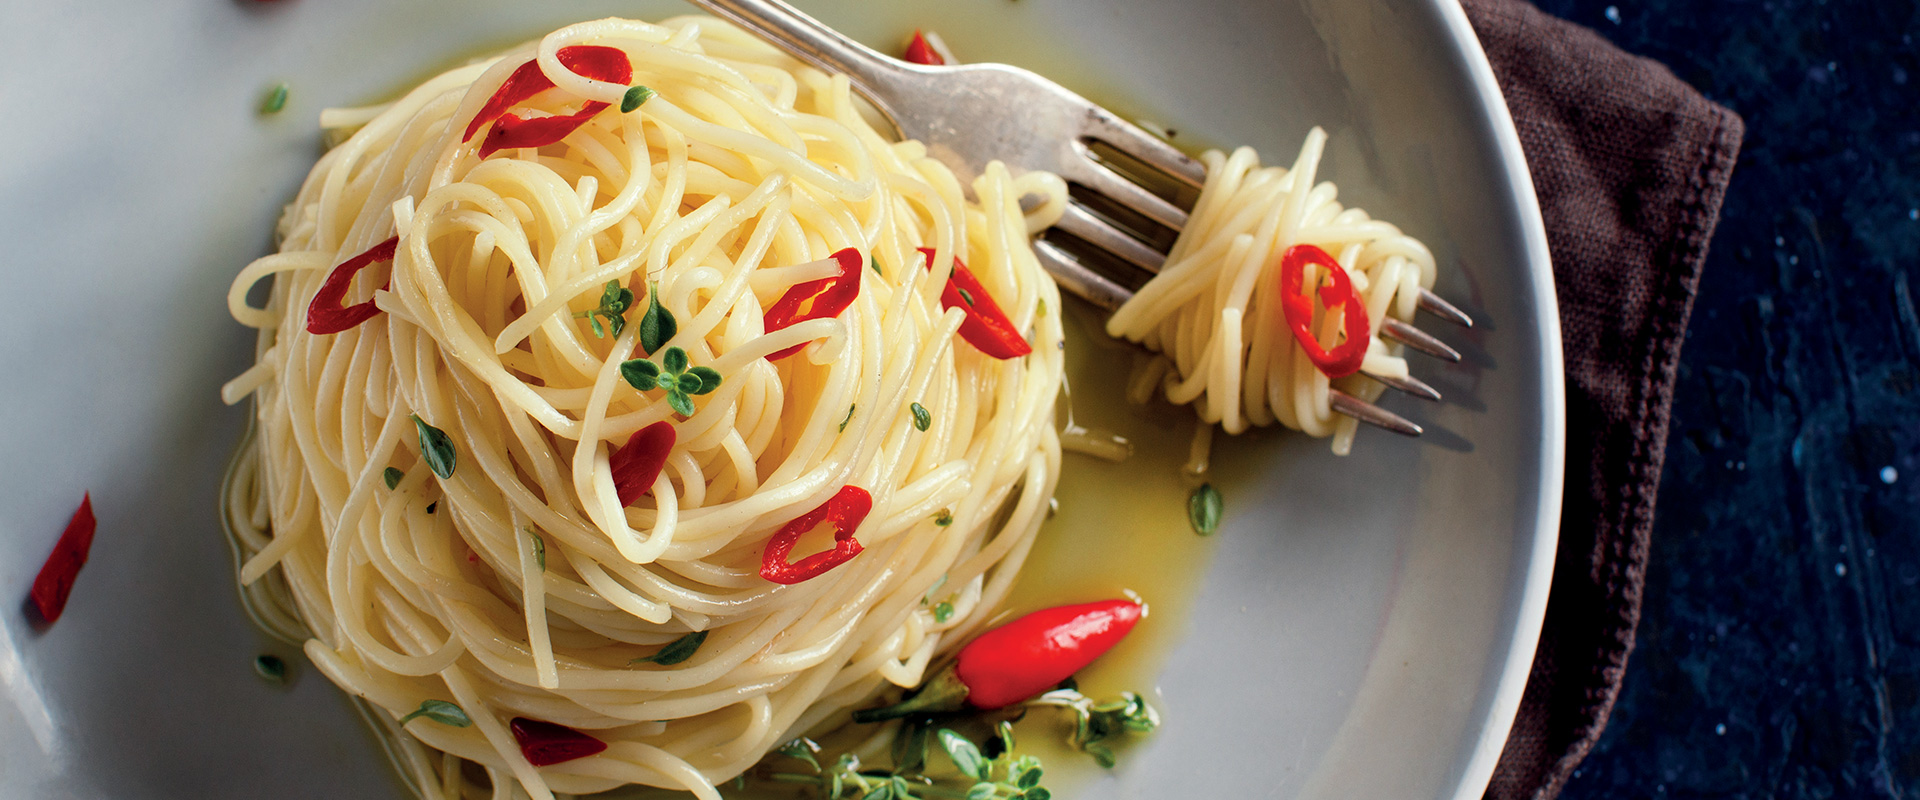 Spaghetti mit Knoblauch, Öl und Chili - Fratelli Carli